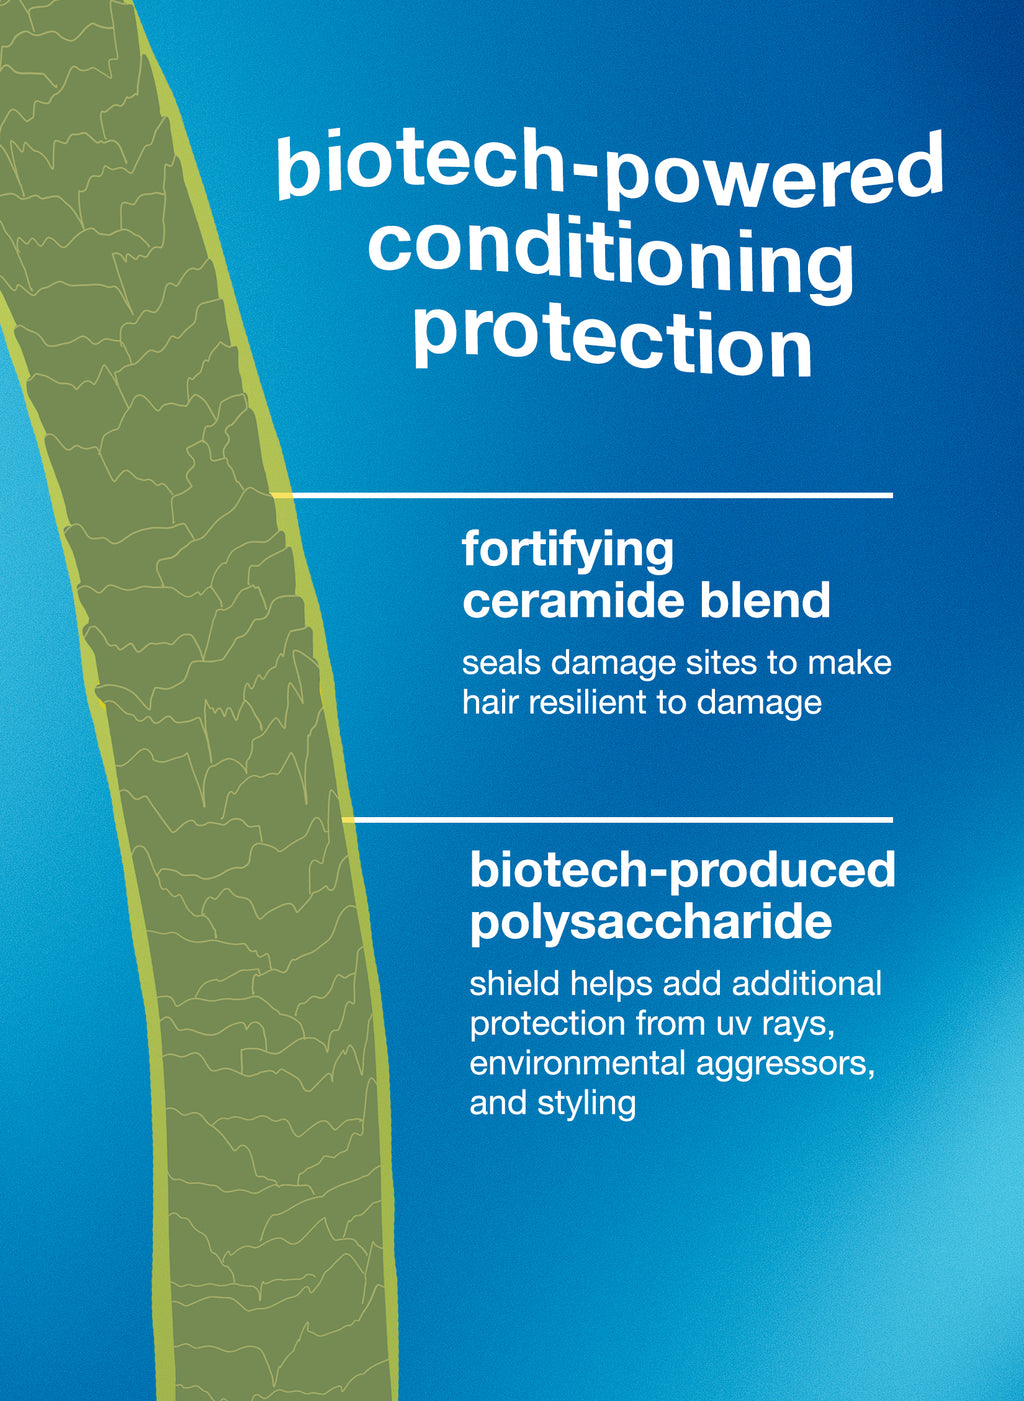 K18 - Damage Shield Protective Conditioner 250ml